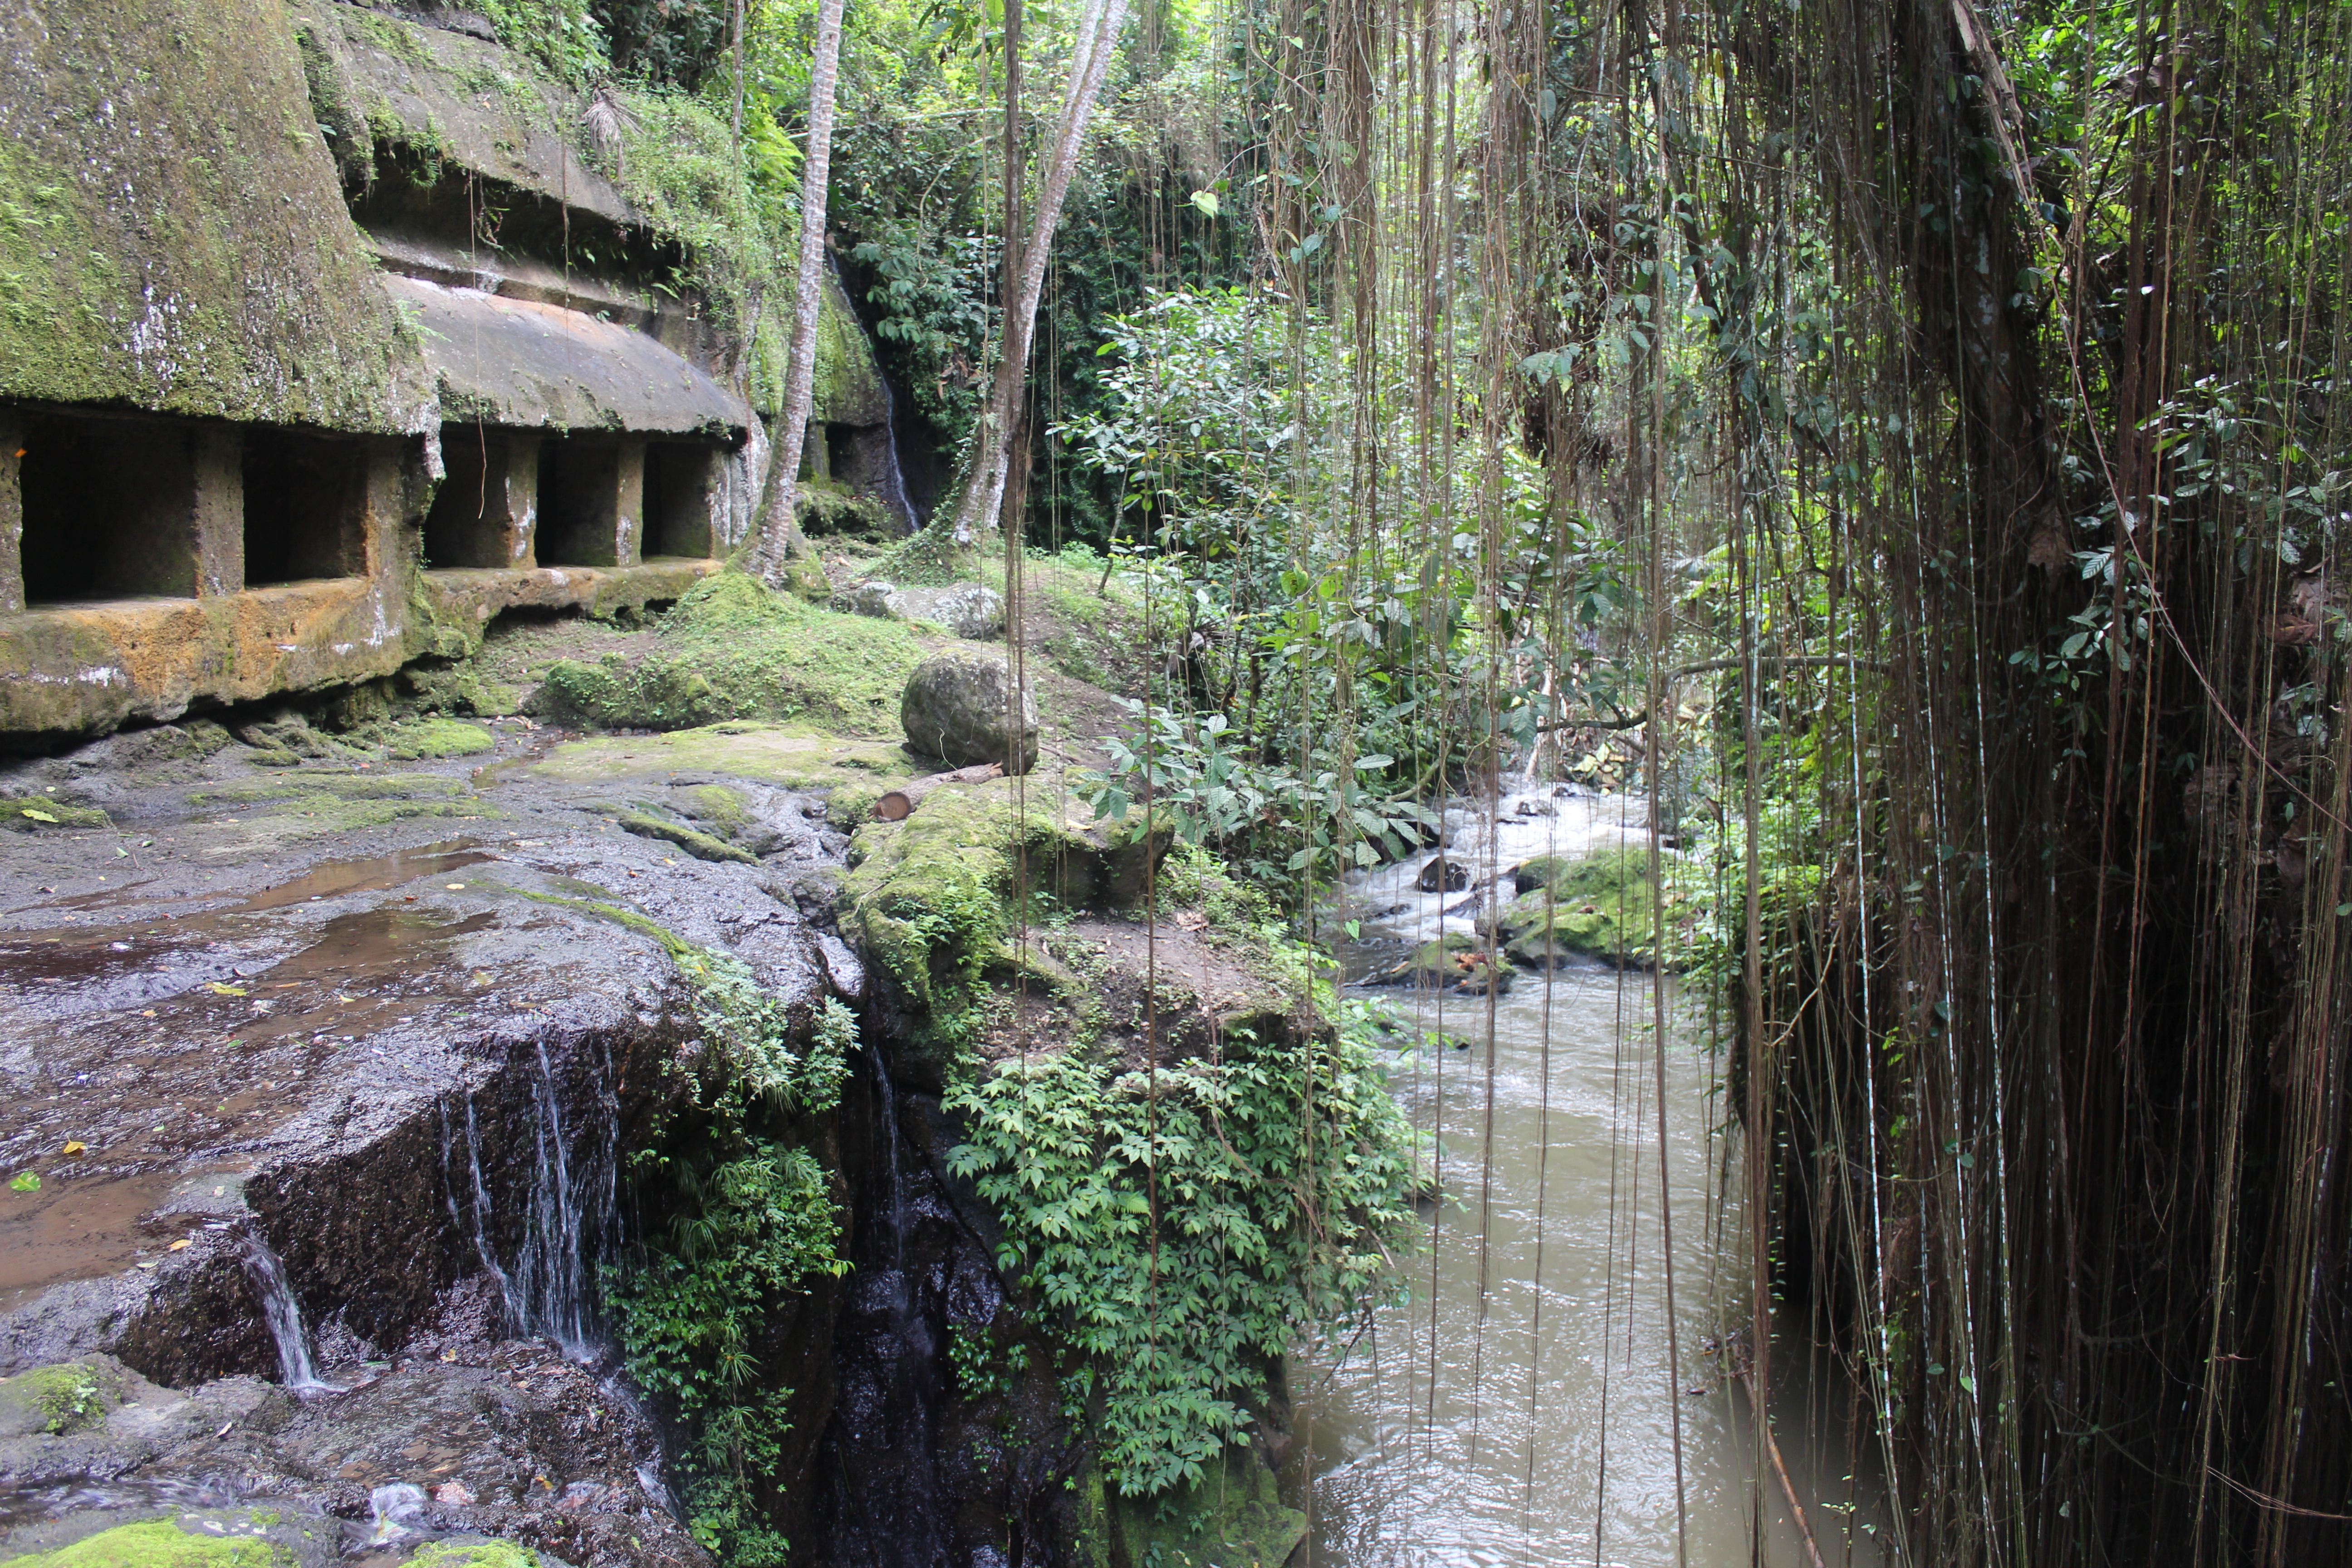 Rock-cut shrines with a river below